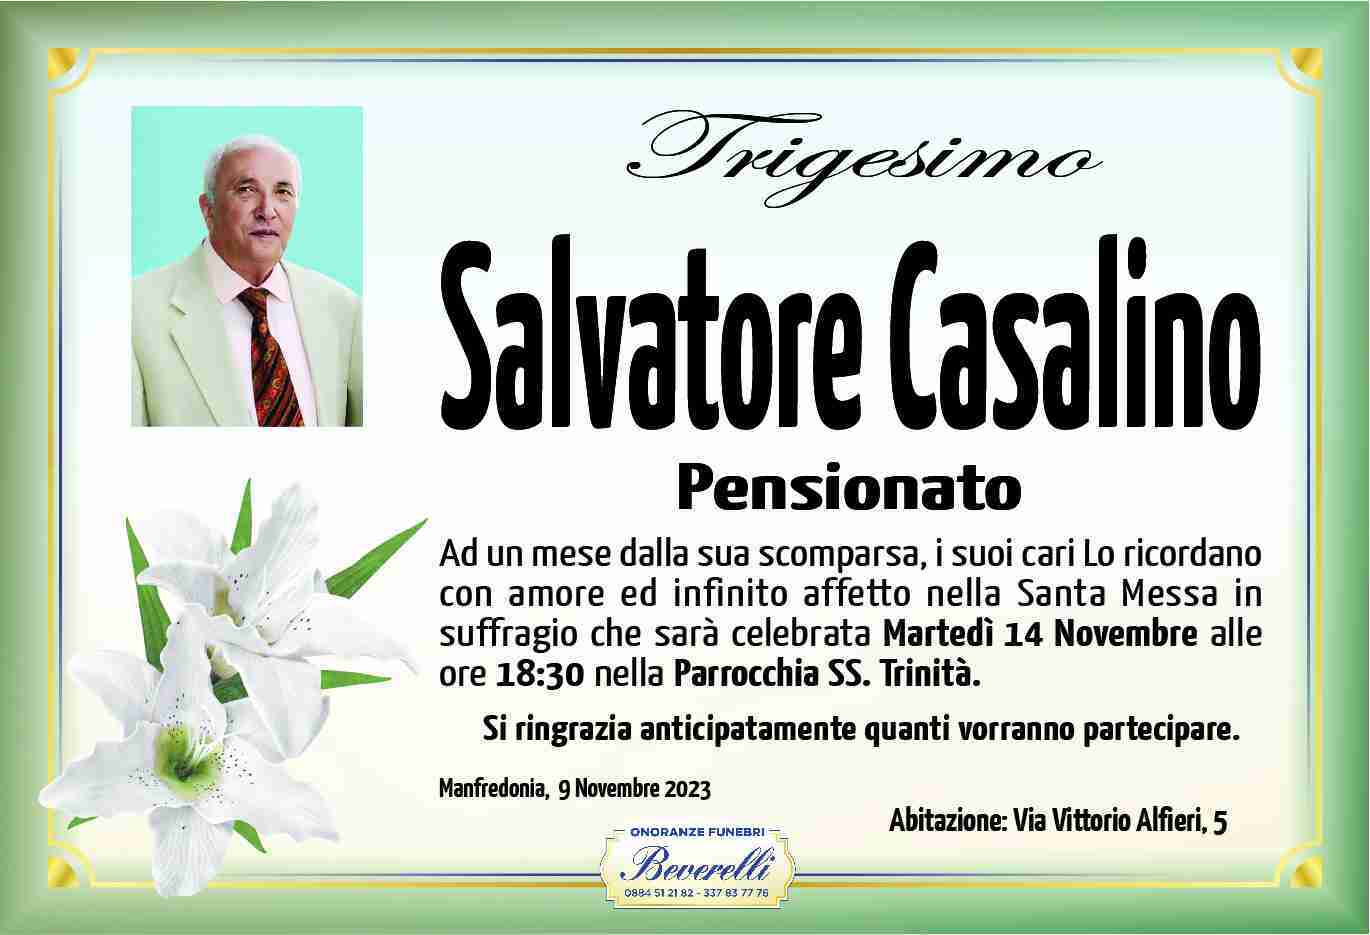 Salvatore Casalino